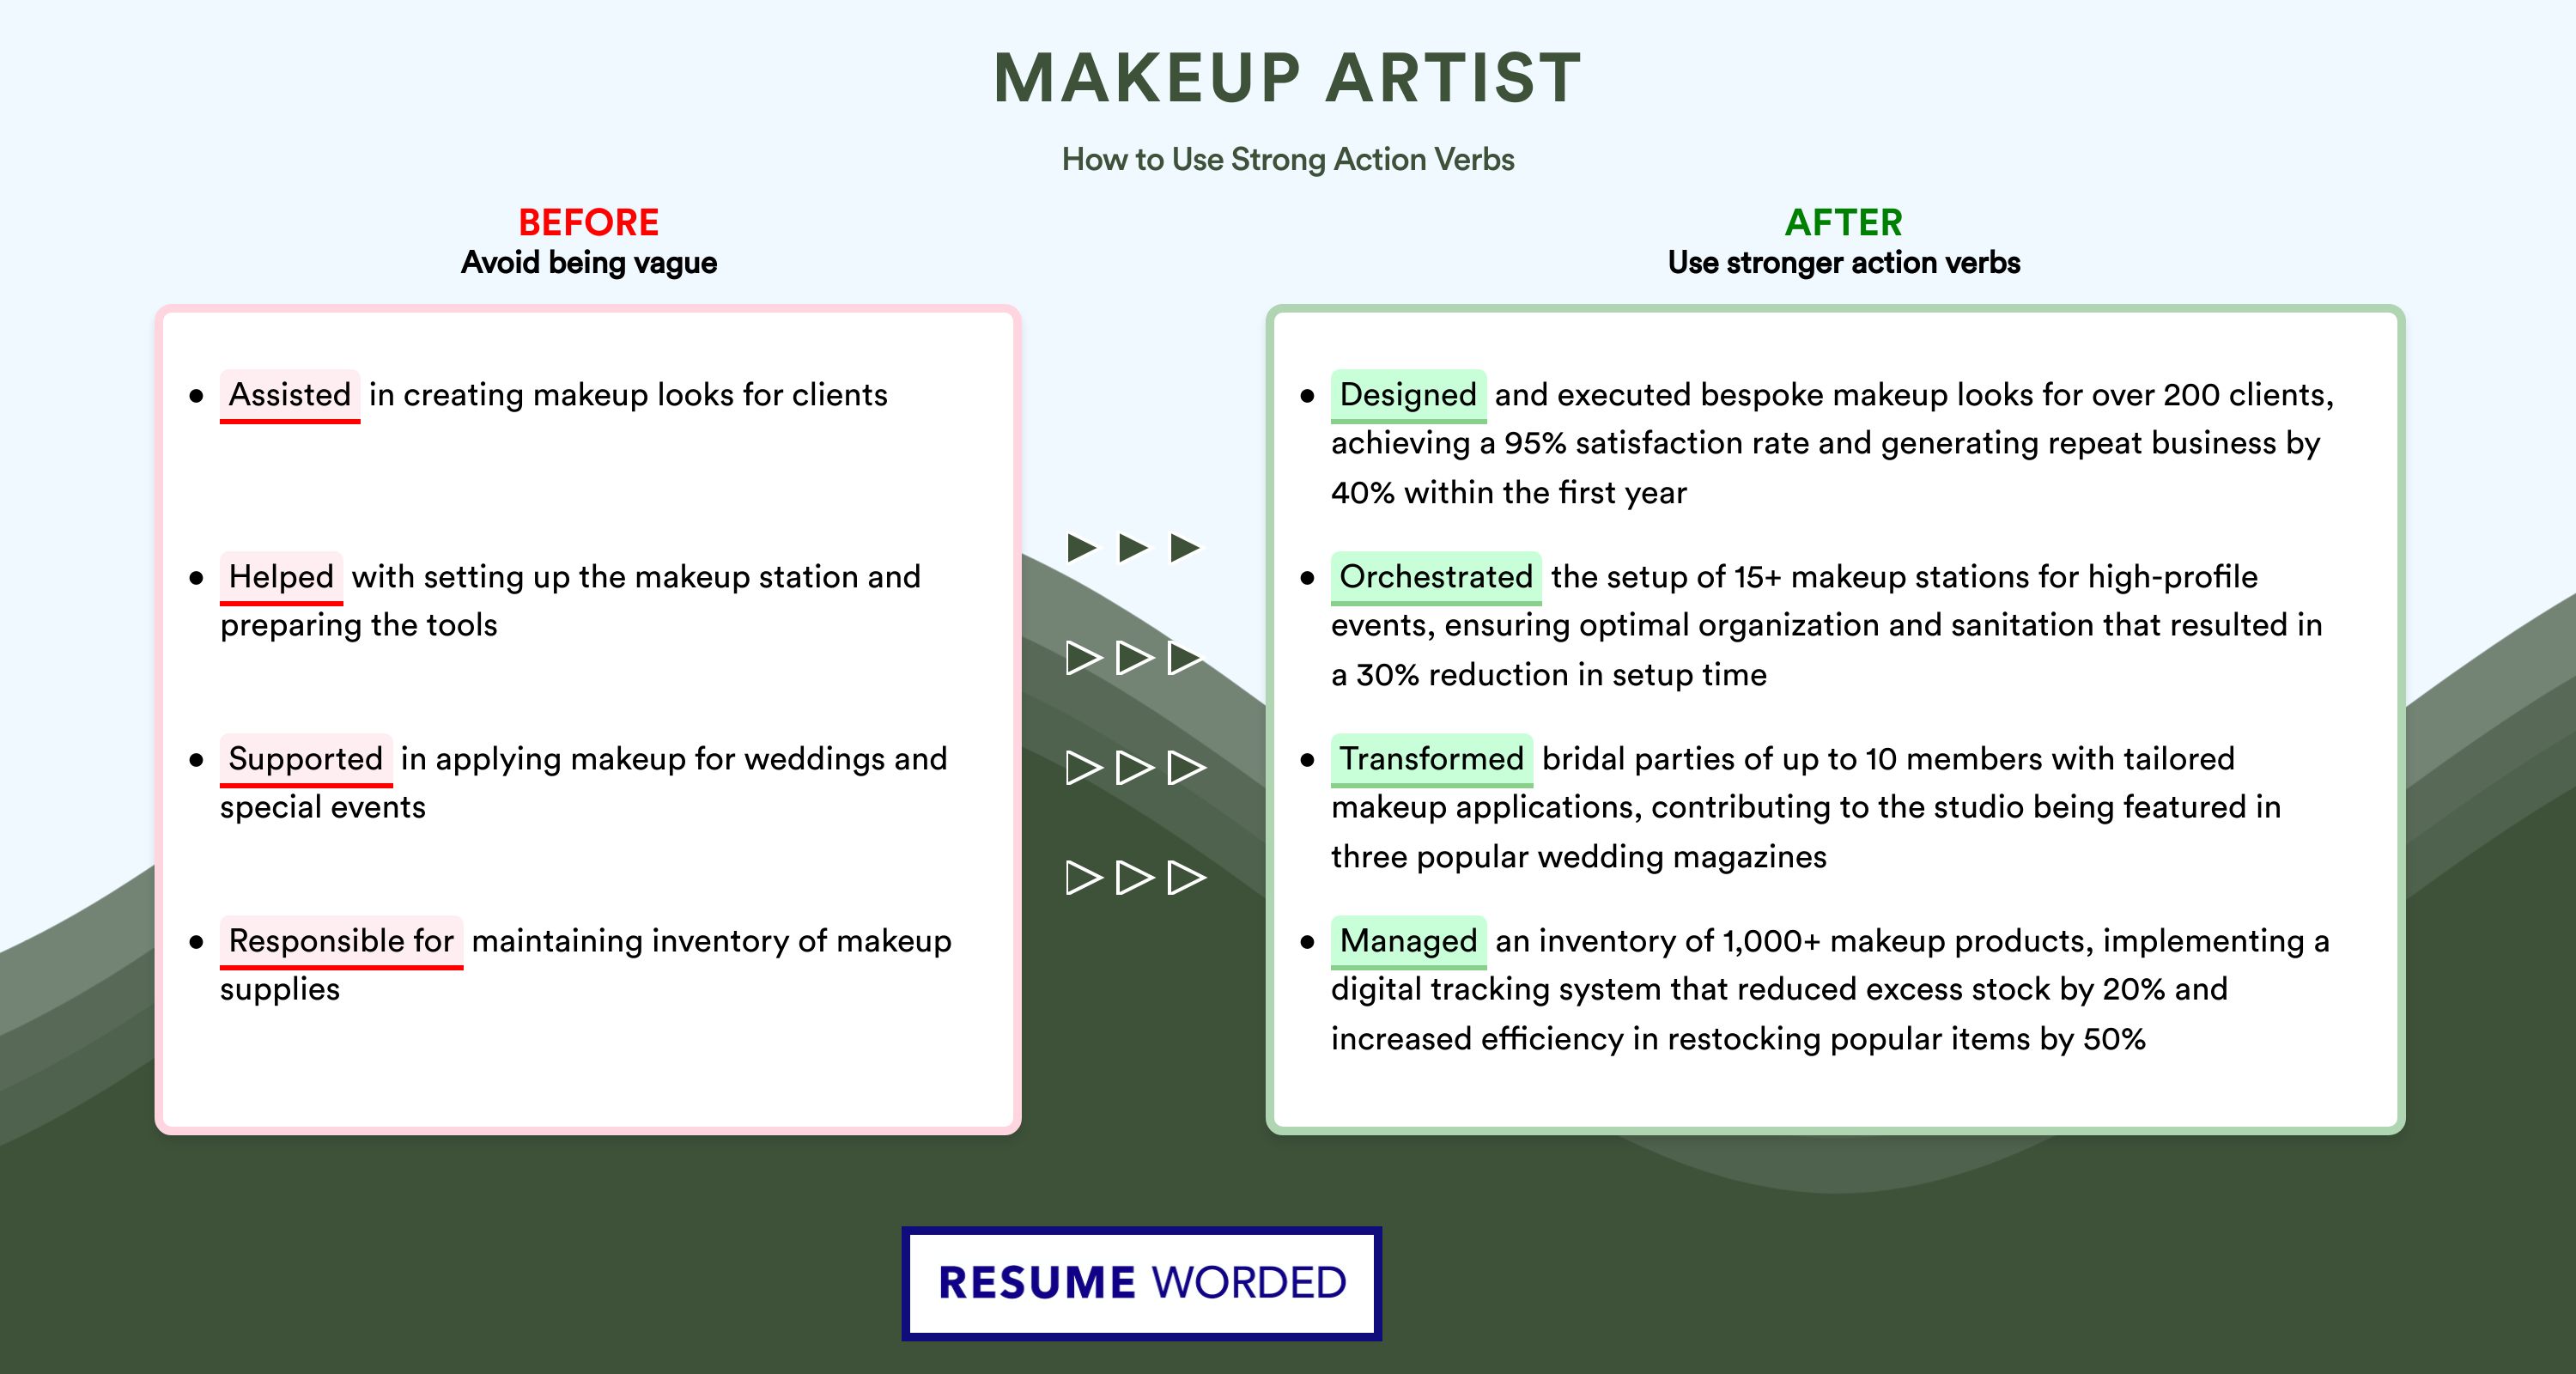 Action Verbs for Makeup Artist